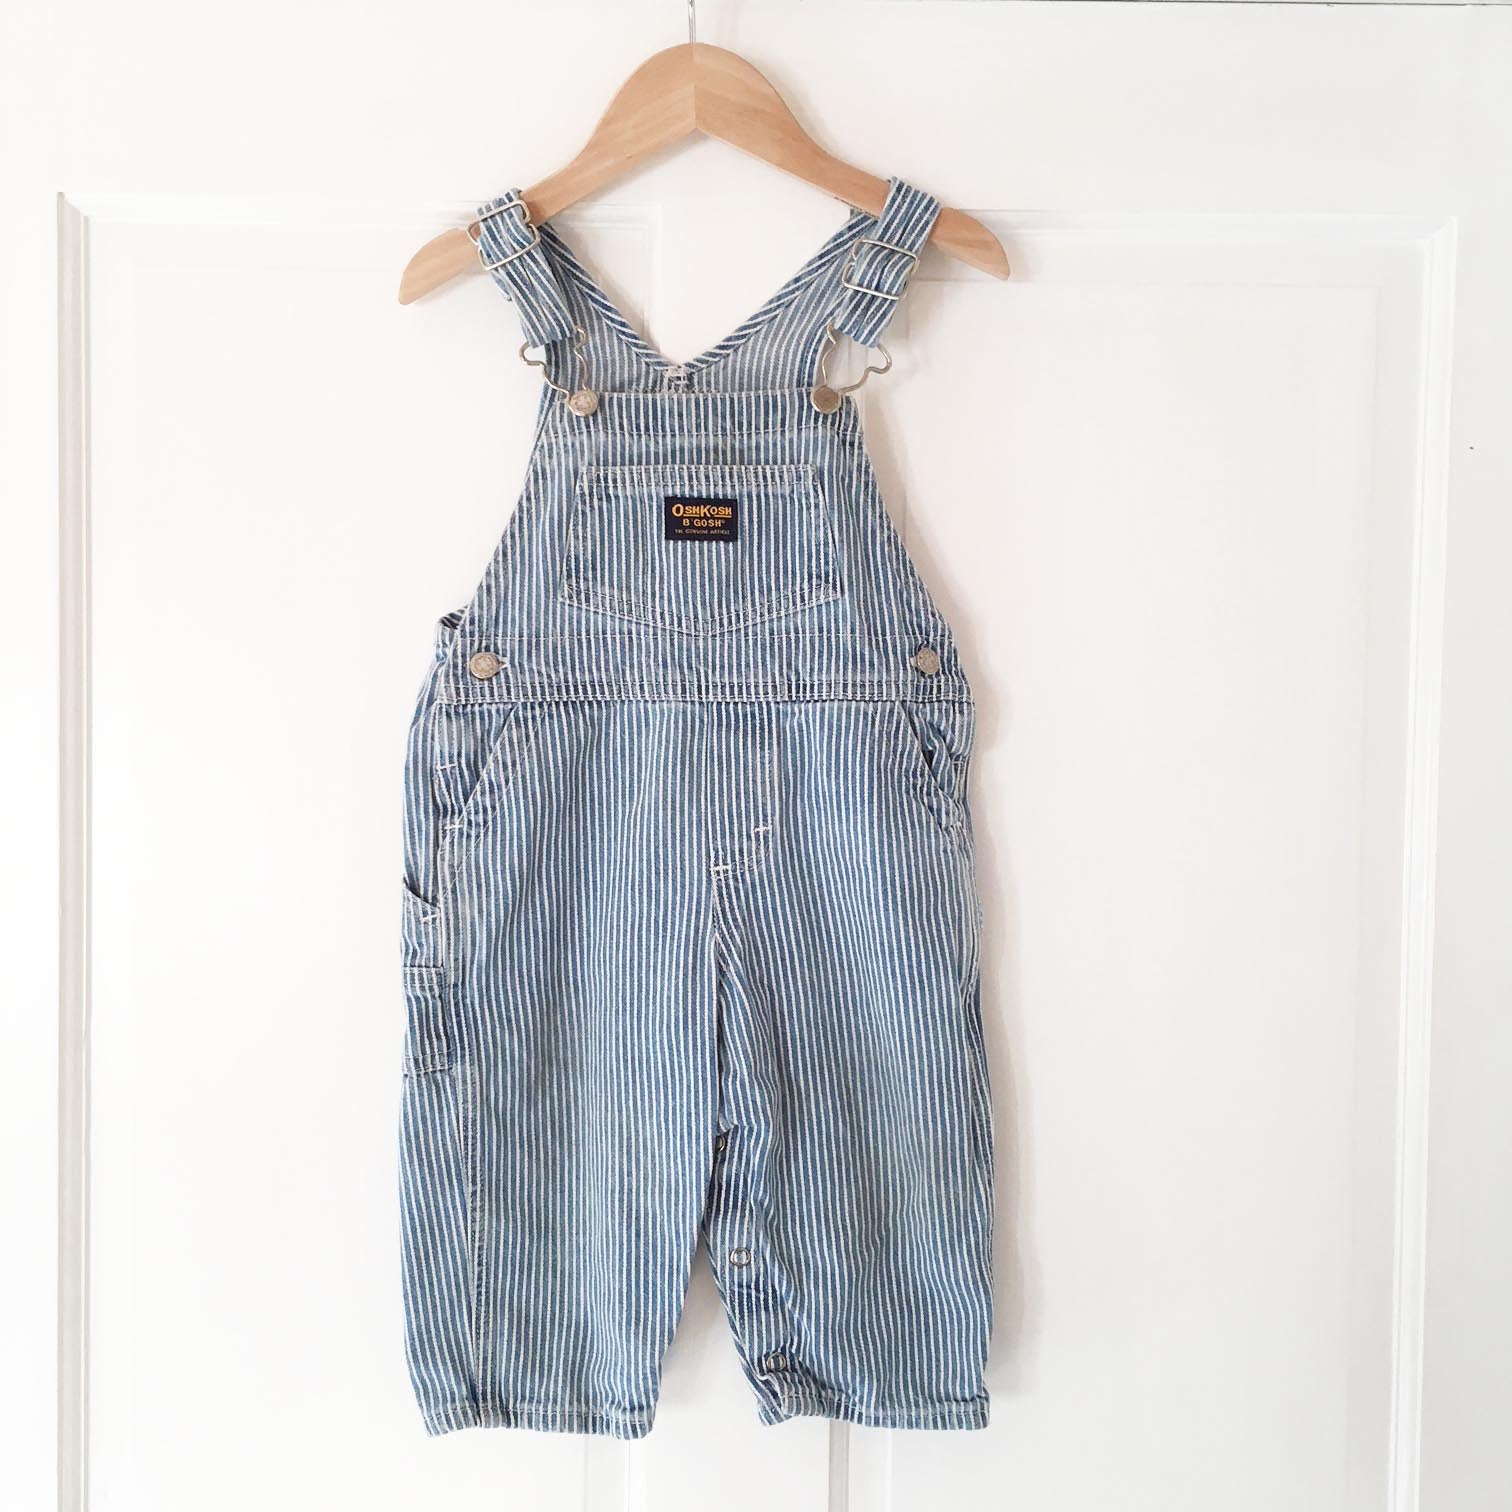 Little Osh Kosh toddler overalls size 2-3